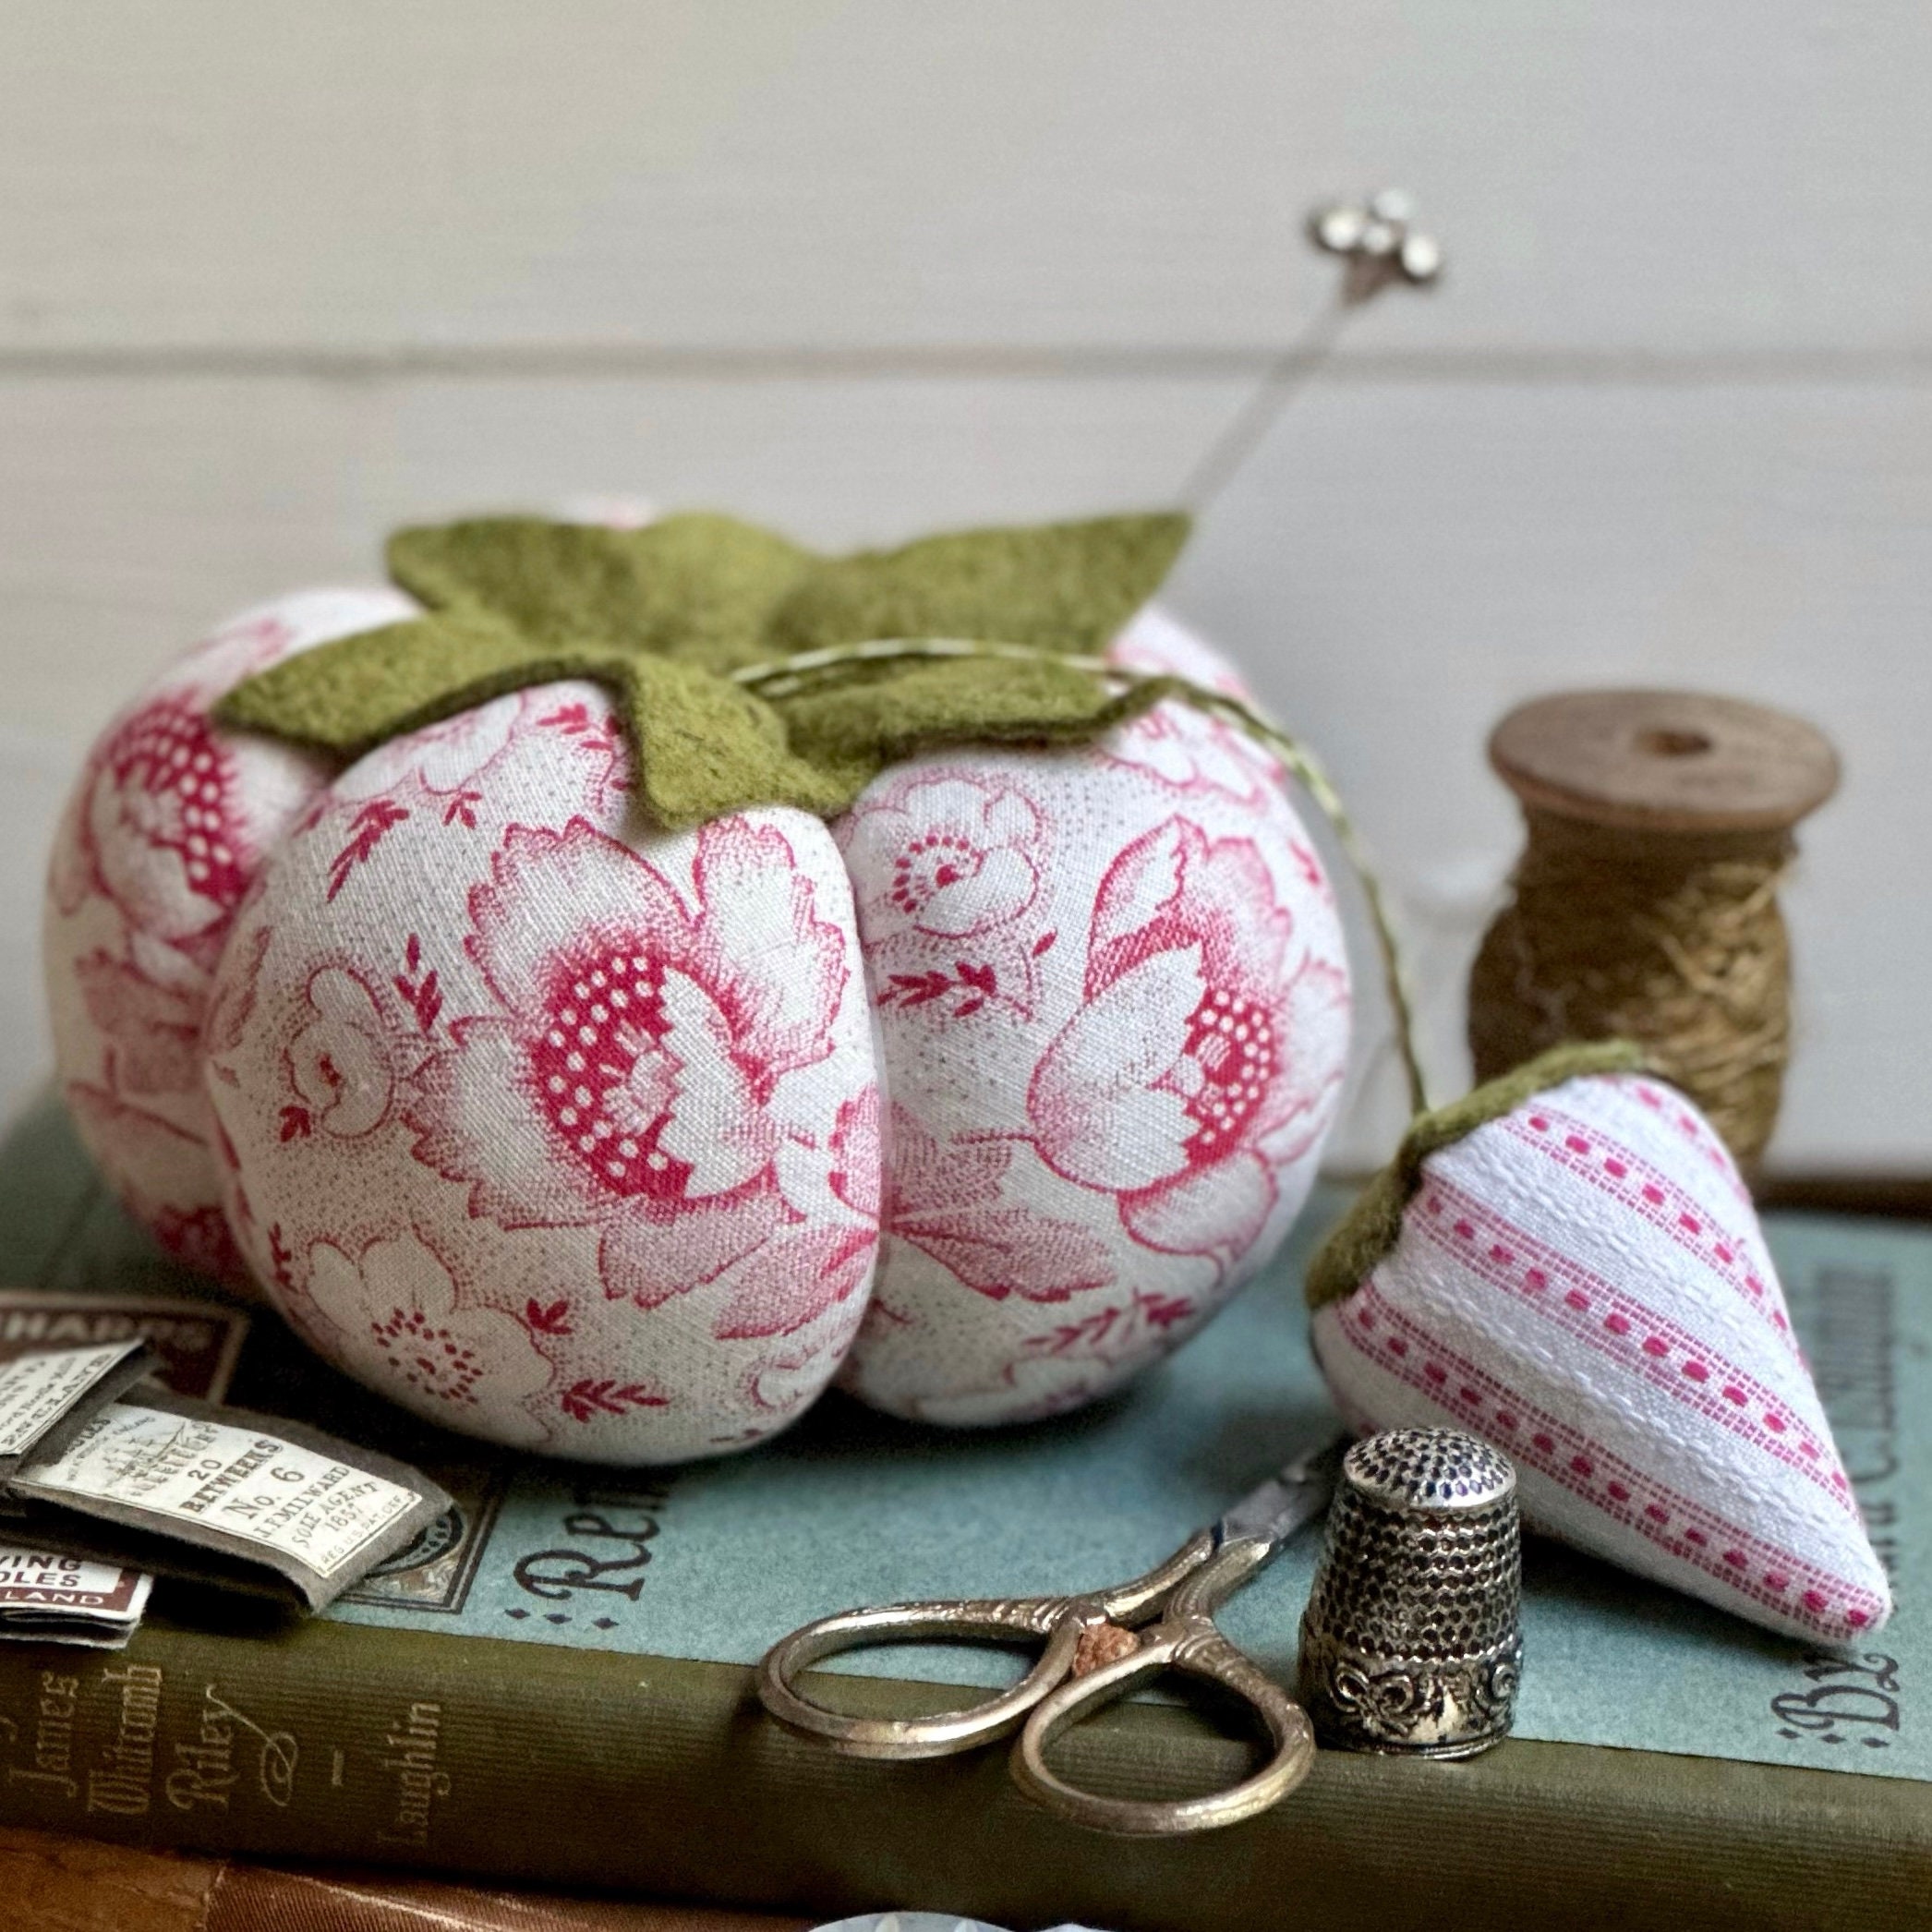 Handmade Cute Sweet Hand Drawn Tomato Pincushion Sewing Quilting Craft – Sniggle  Sloth